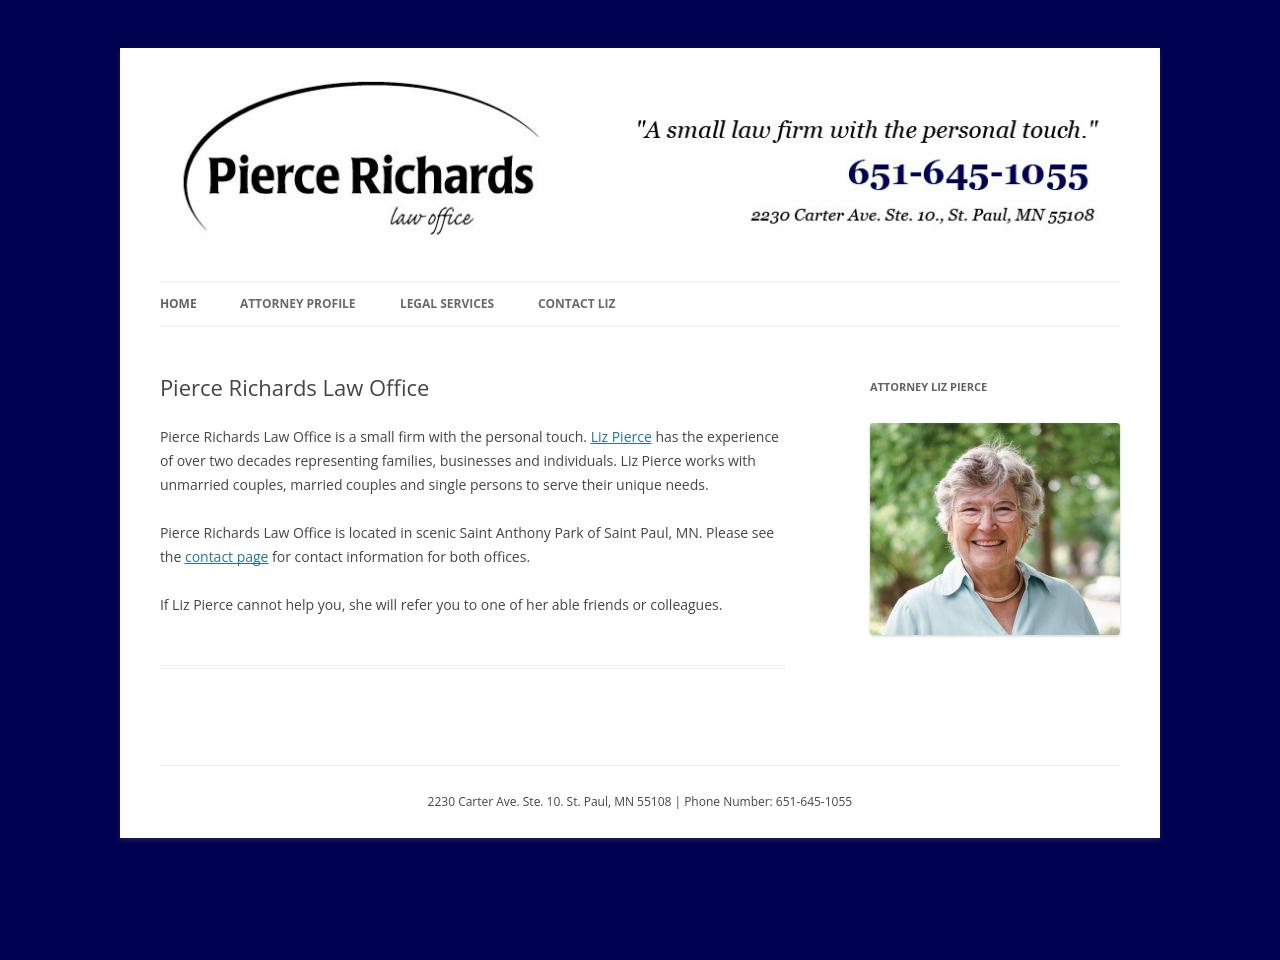 Pierce Richards Law Office / Liz Pierce - Saint Paul MN Lawyers